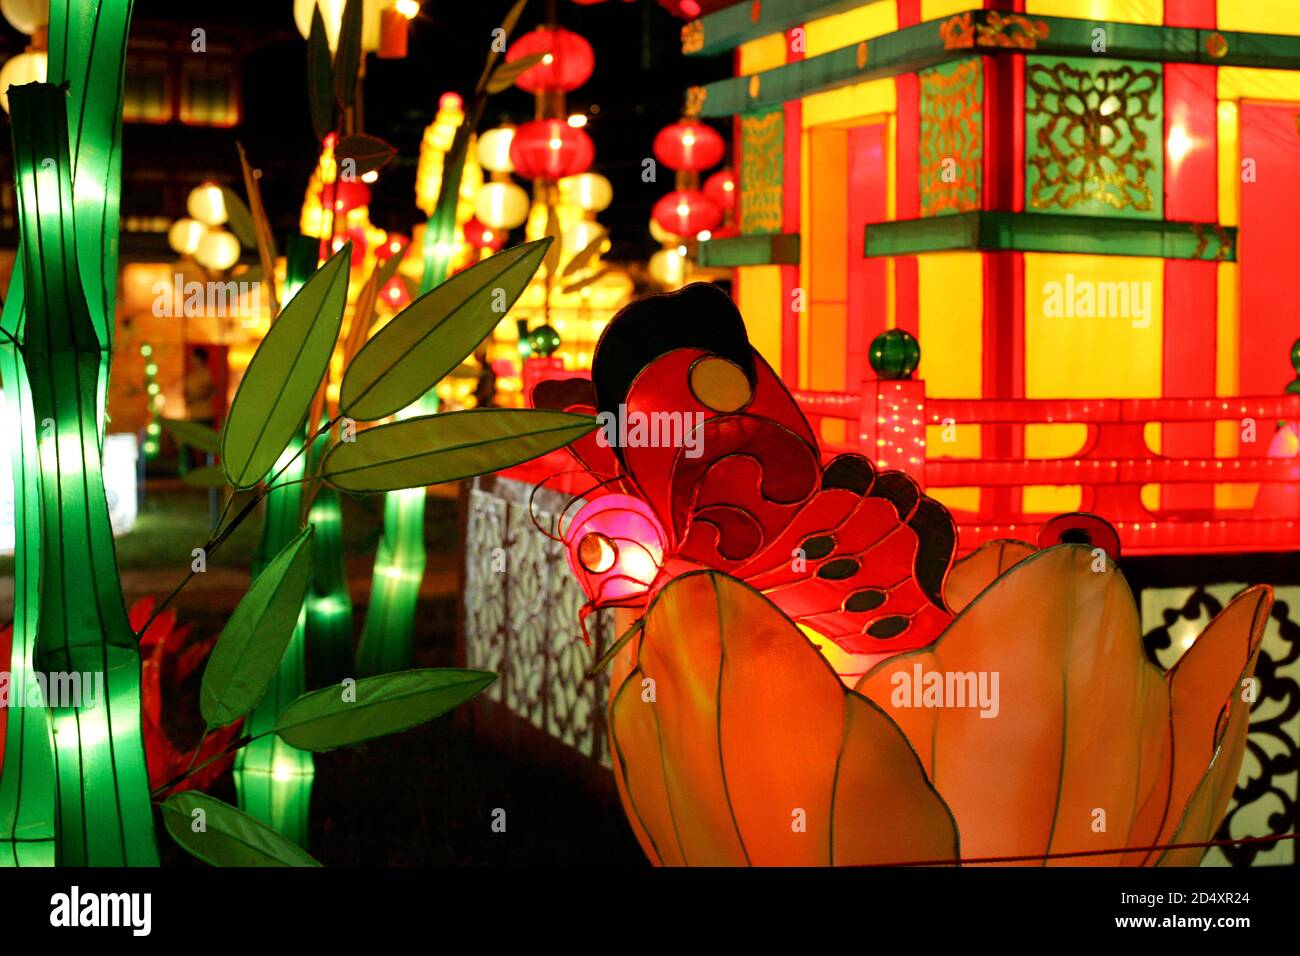 Decorations, Chinese New Year, Singapore Stock Photo